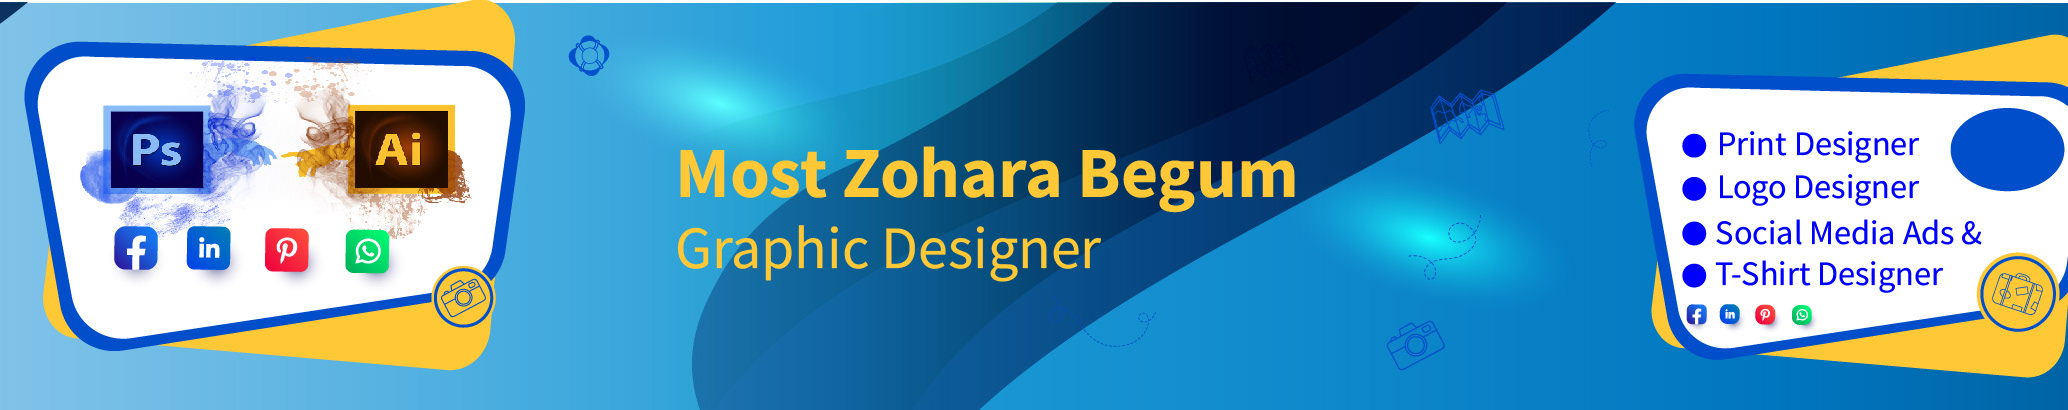 Most zohara begum's profile banner